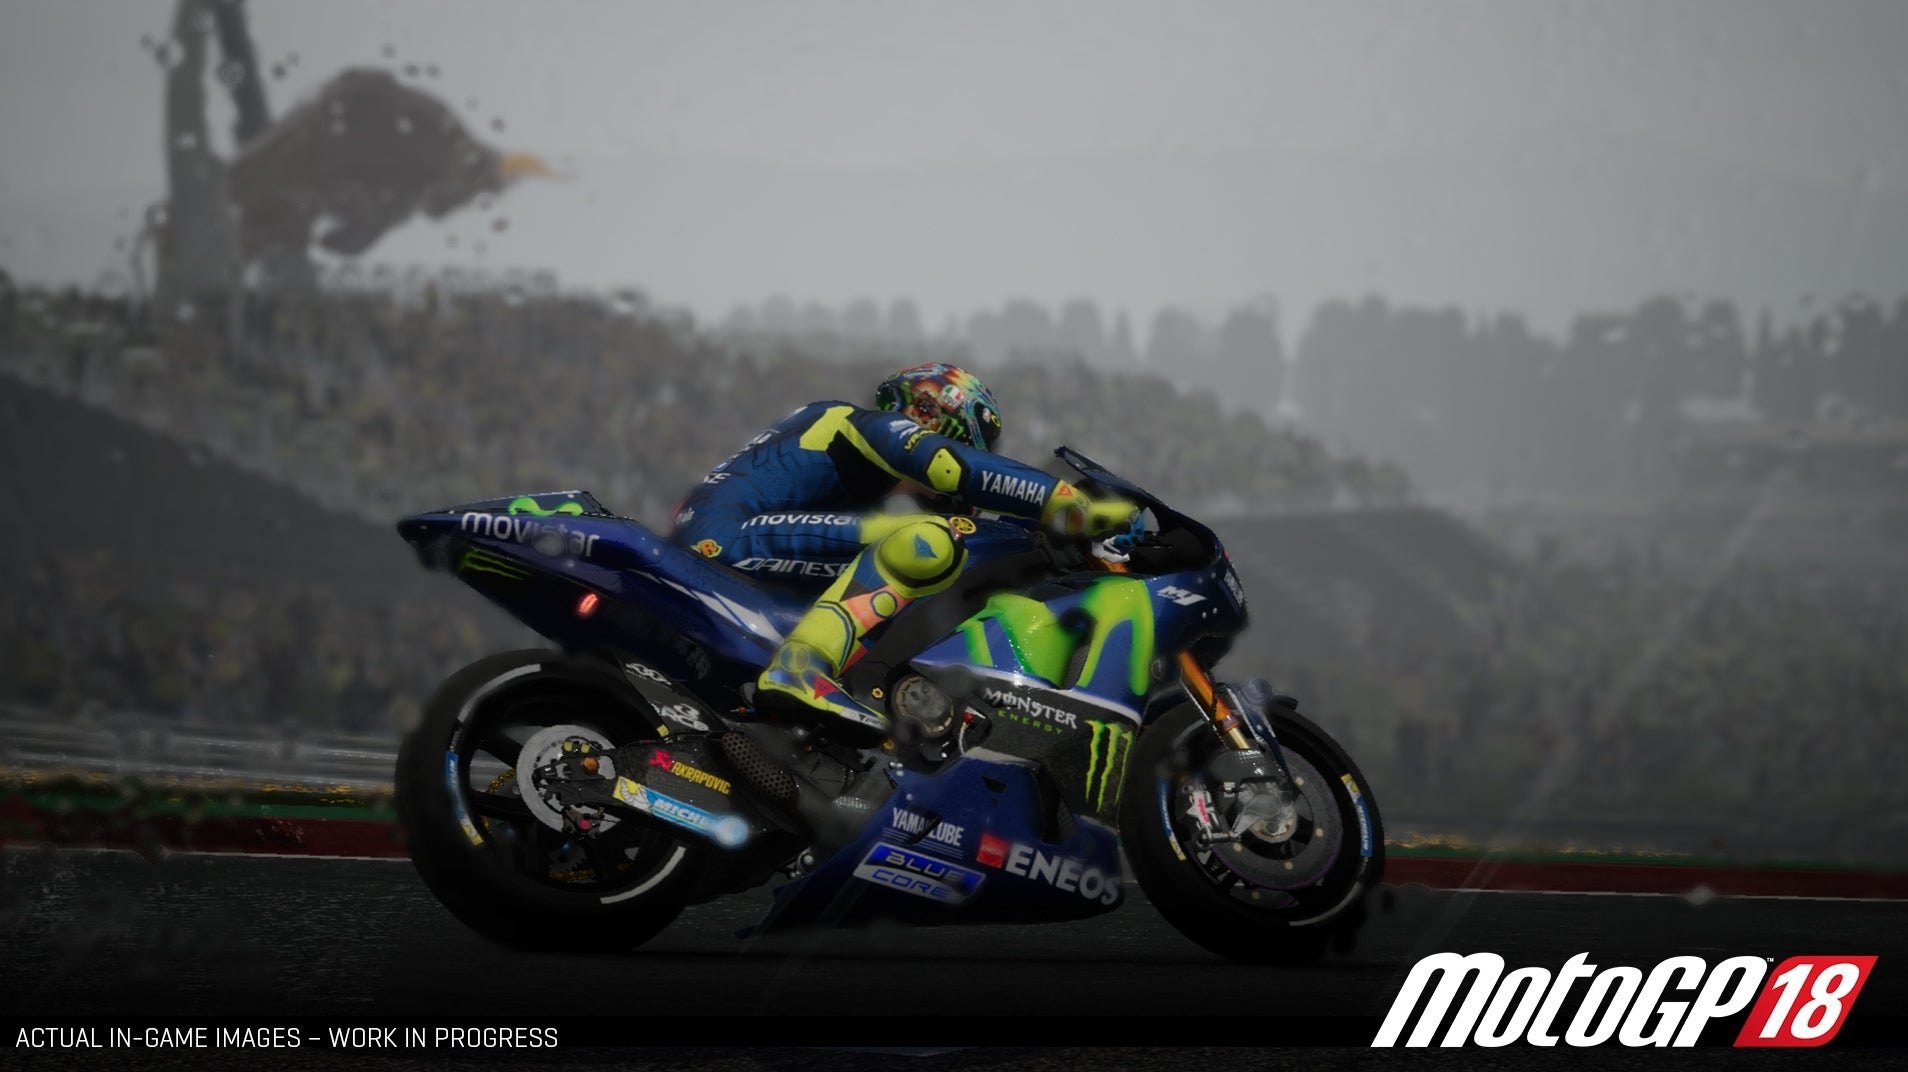 Immagine di MotoGP 18 si mostra nel primo video di gameplay